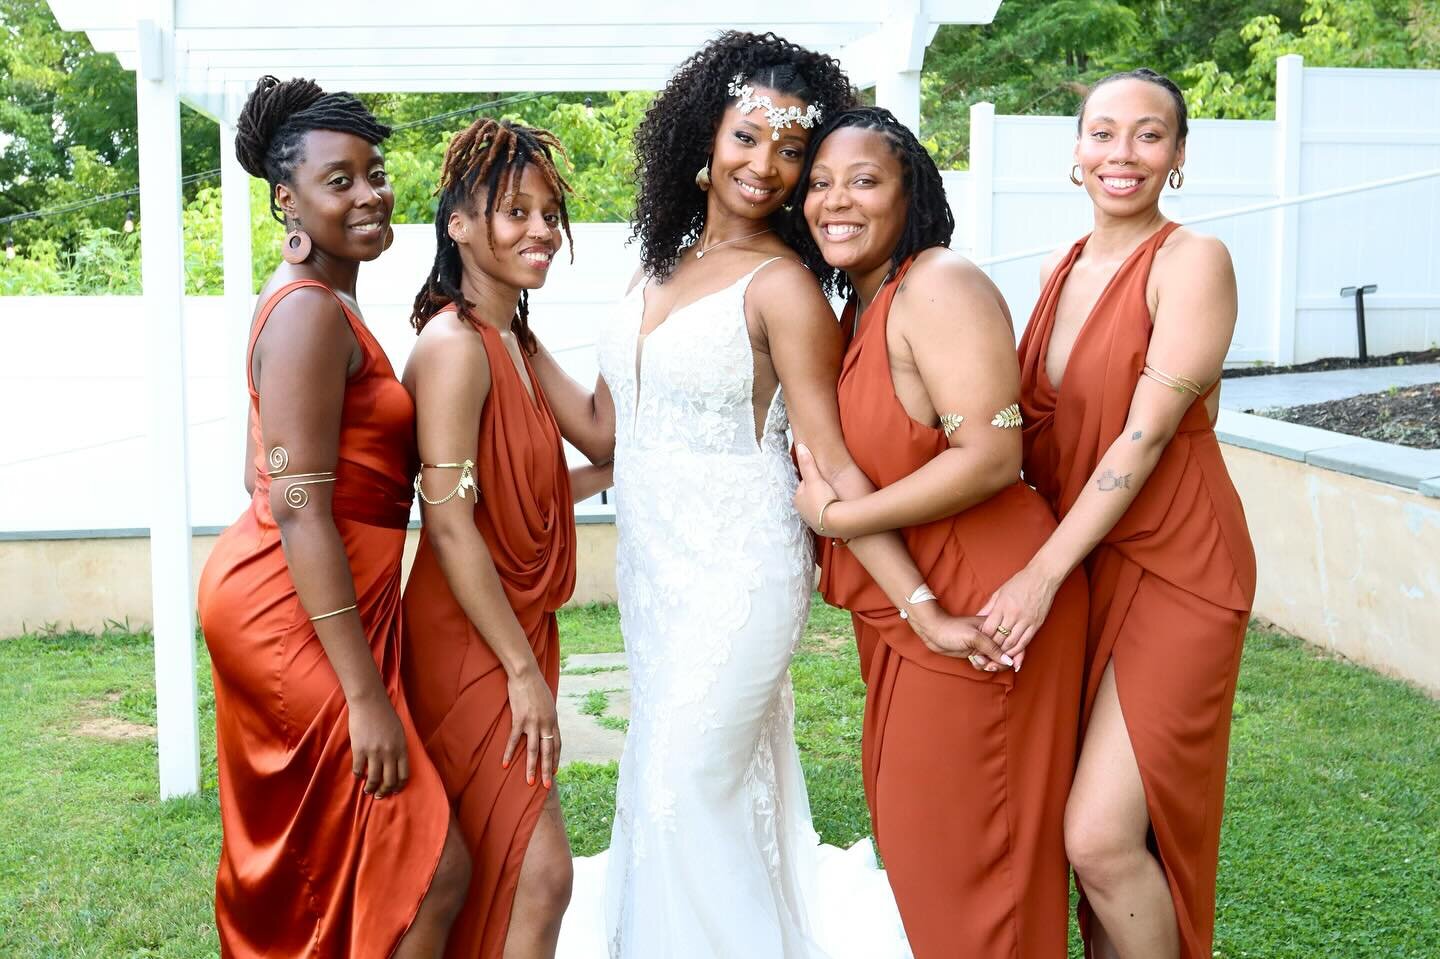 Celebrating strength, grace, and all the women who make Milton Ridge shine. ✨ #InternationalWomensDay

#miltonridge #mdwedding #marylandwedding #marylandweddingplanner #marylandweddingvenue #mdweddings #dmvweddings #weddingphotography #weddingideas #